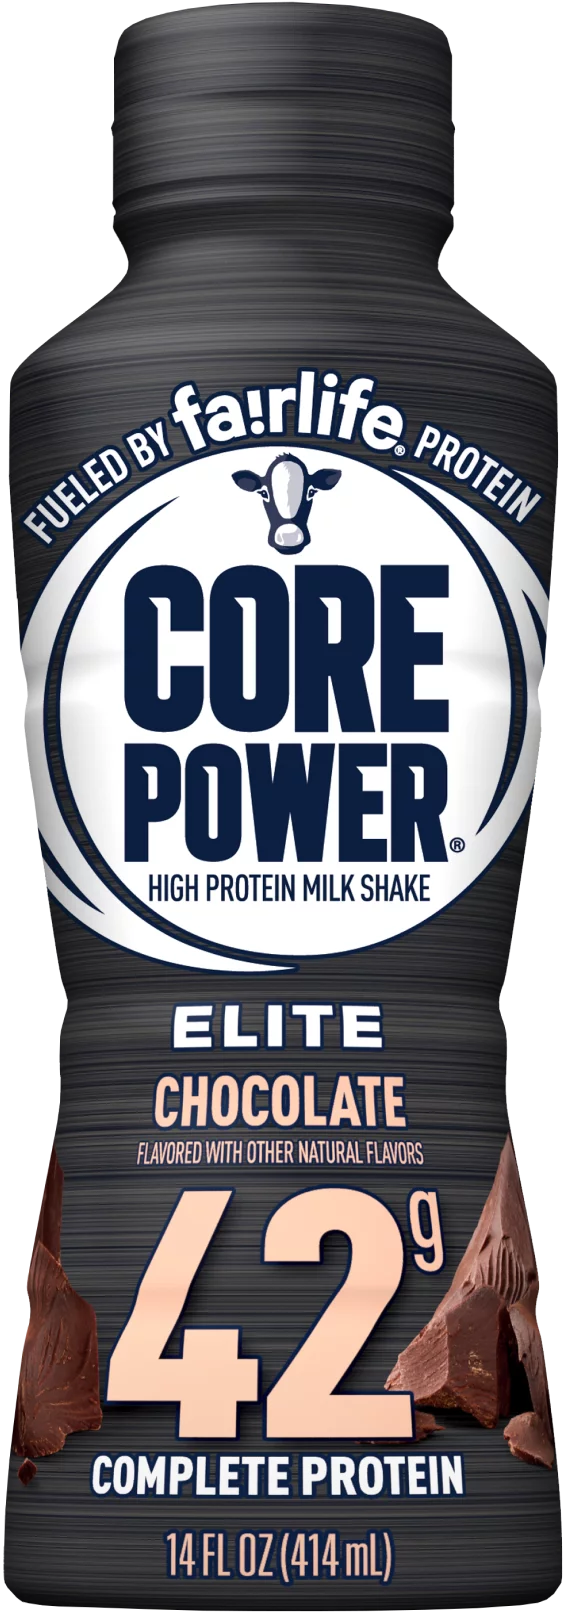 fairlife Core Power elite chocolate 42g